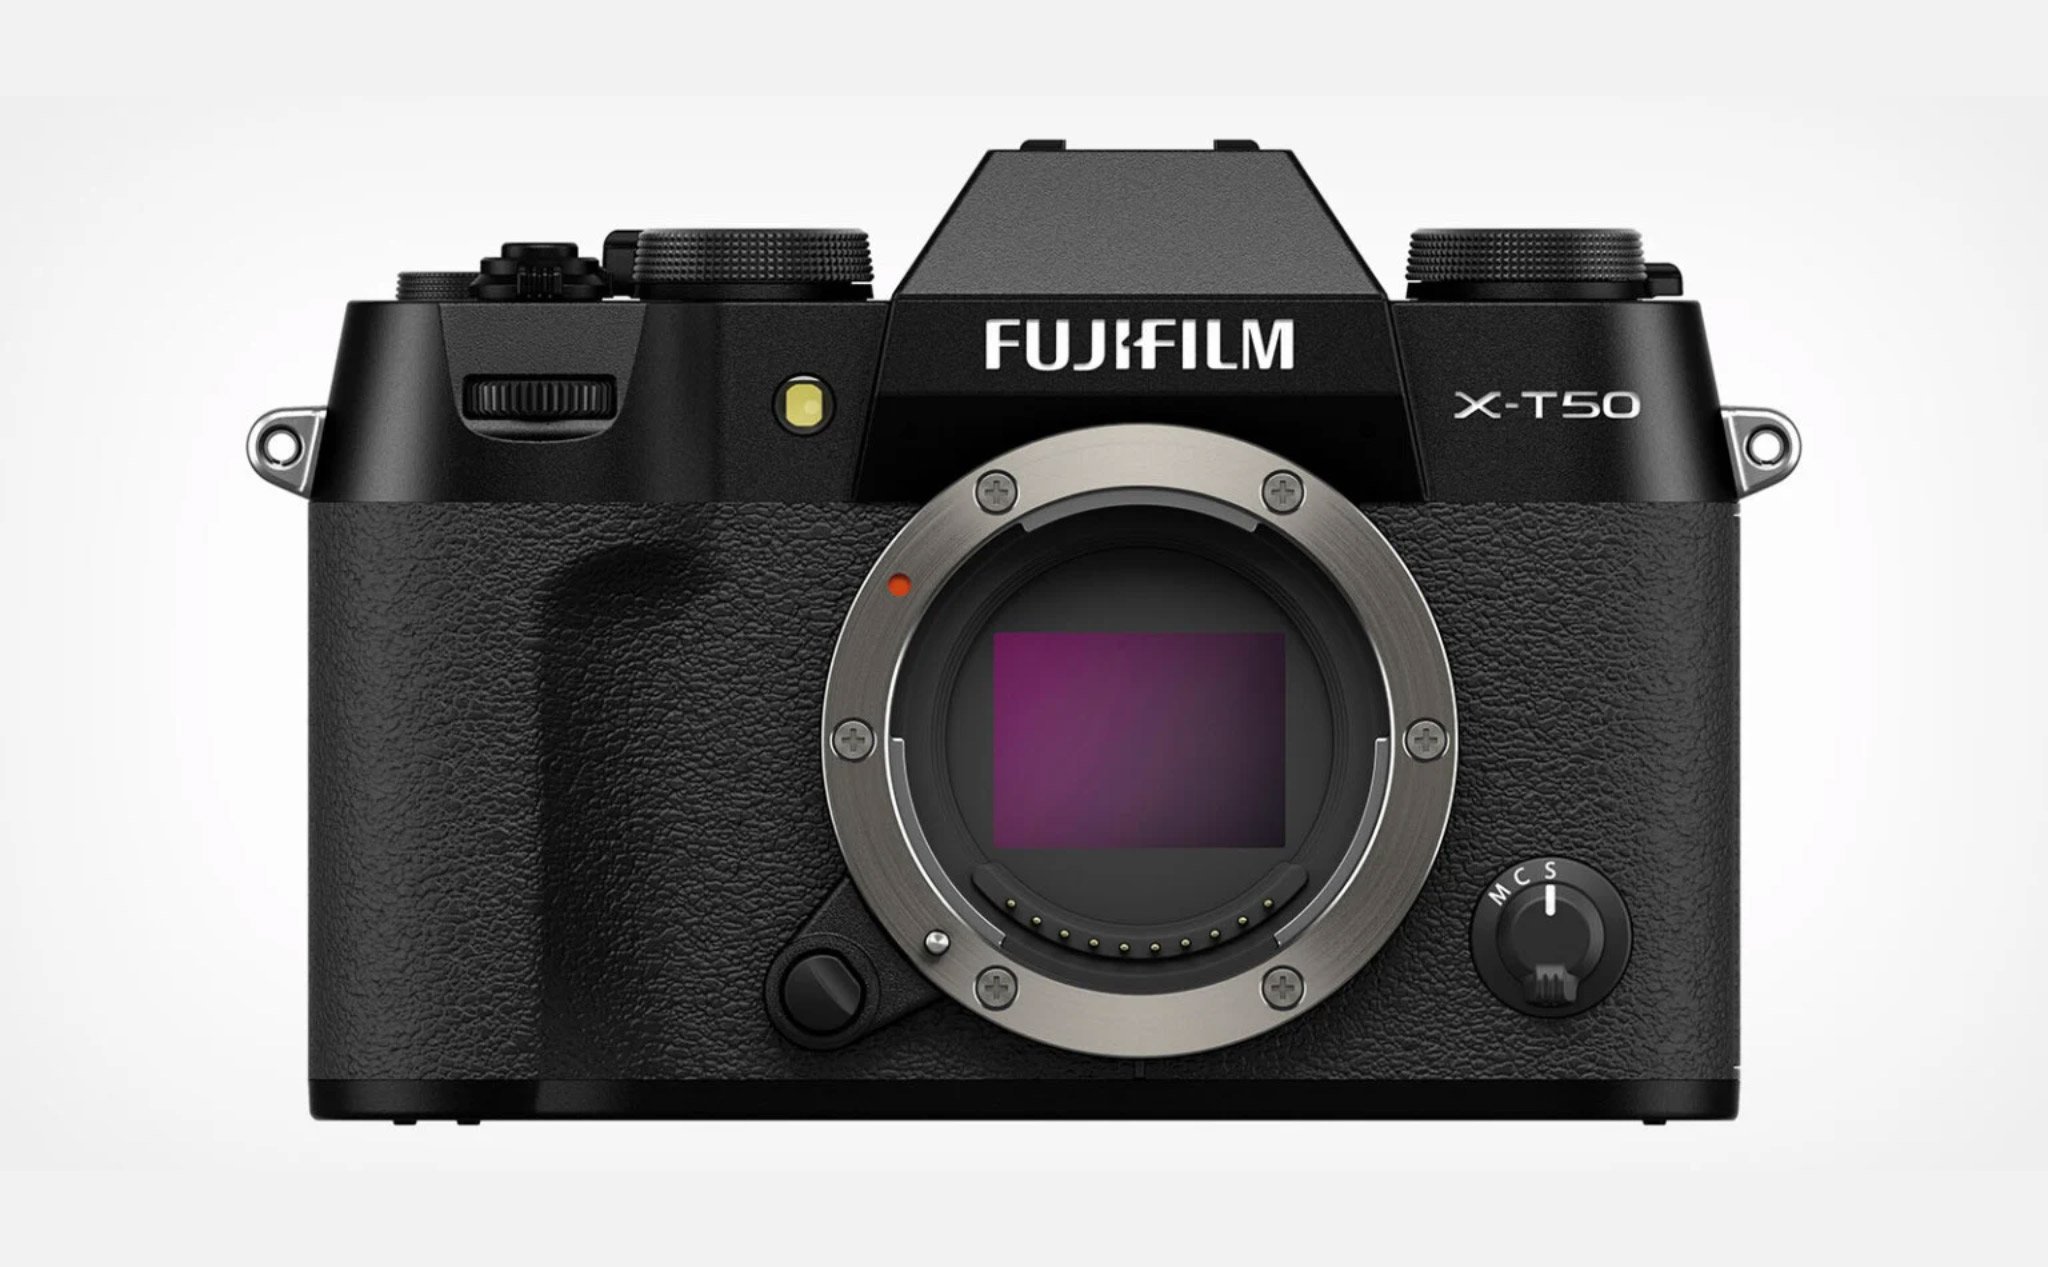 Ra mắt Fujifilm X-T50: 40MP, quay 6.2K 4:2:2 10bit